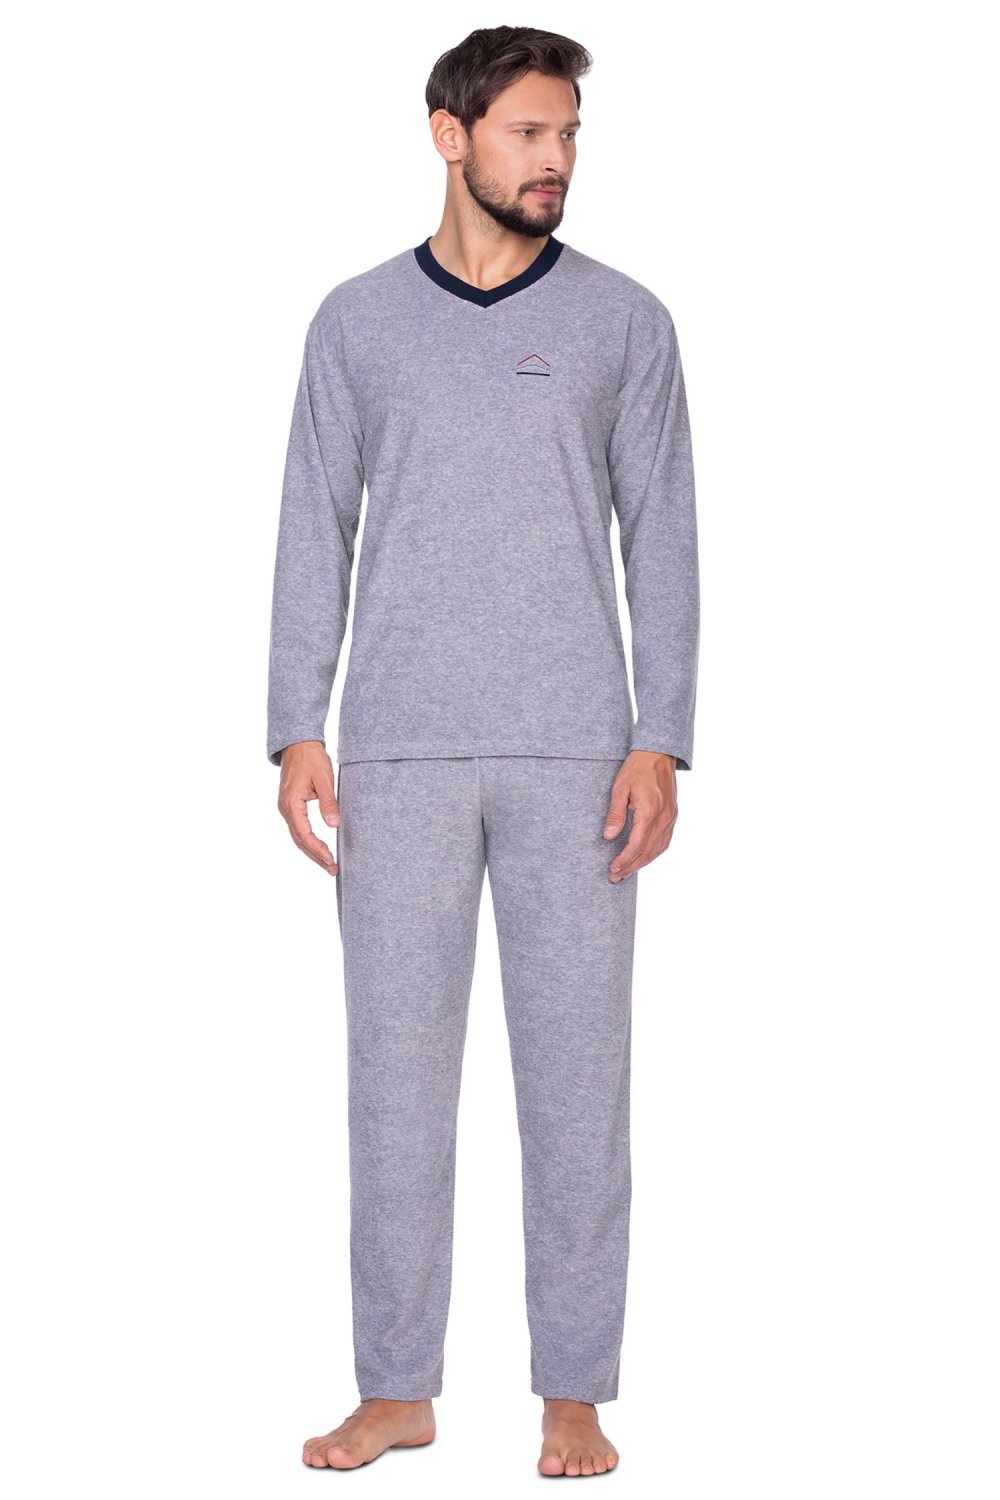 E-shop Pánske pyžamo 592 grey plus